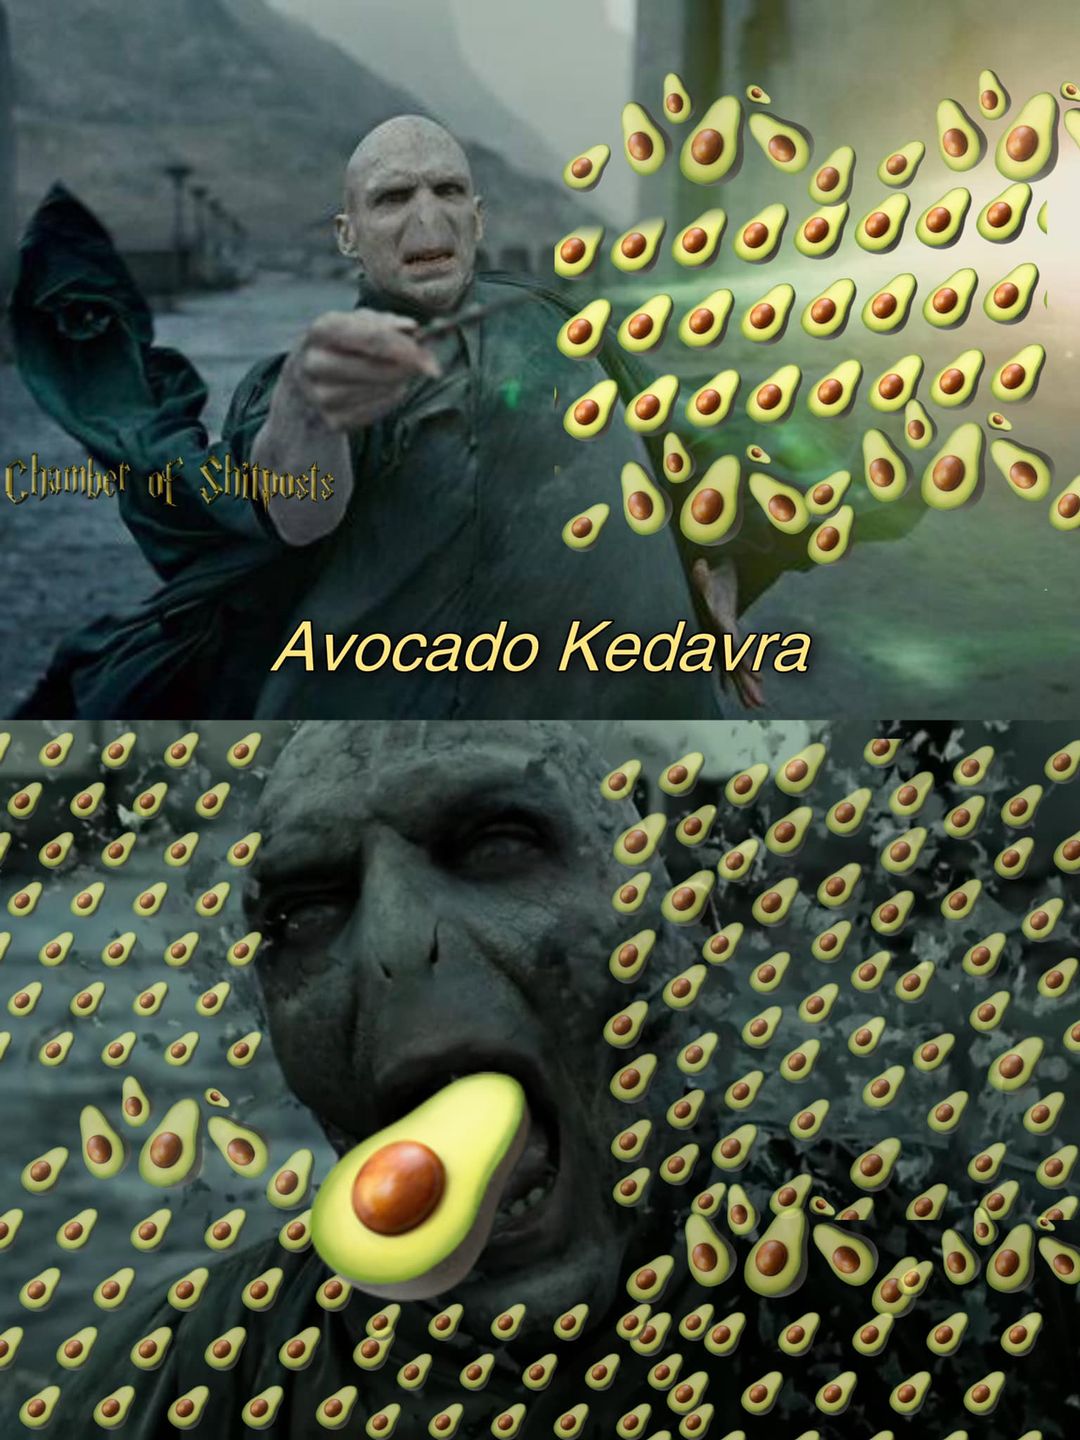 Harry Potter memes - poster - Chamber of Shitposts 10000 a. gaa 80.00 abdbgrade Avocado Kedavra O 000.